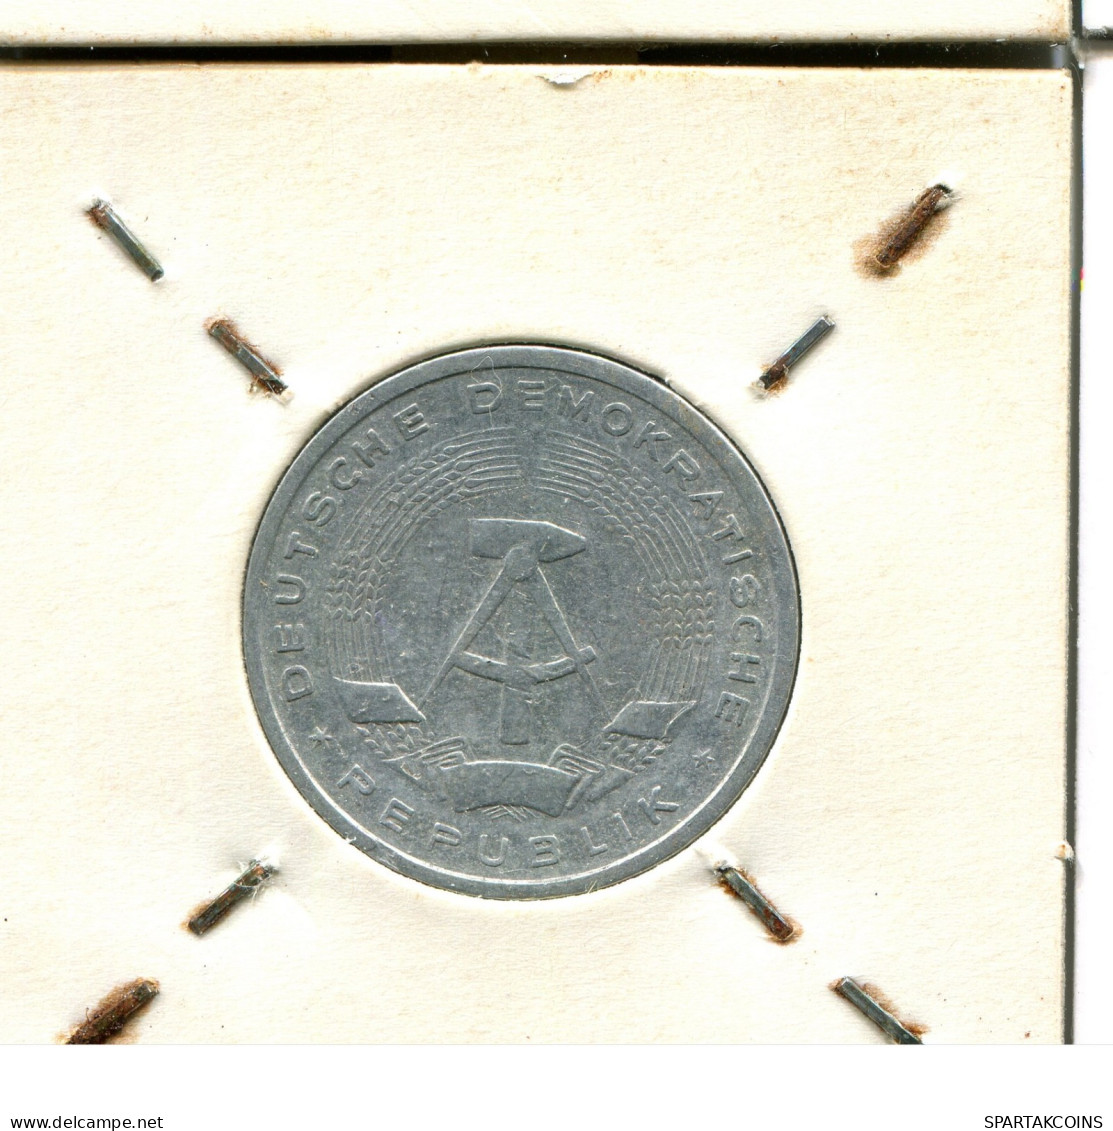 1 DM 1956 A DDR EAST ALEMANIA Moneda GERMANY #AW512.E.A - 1 Mark